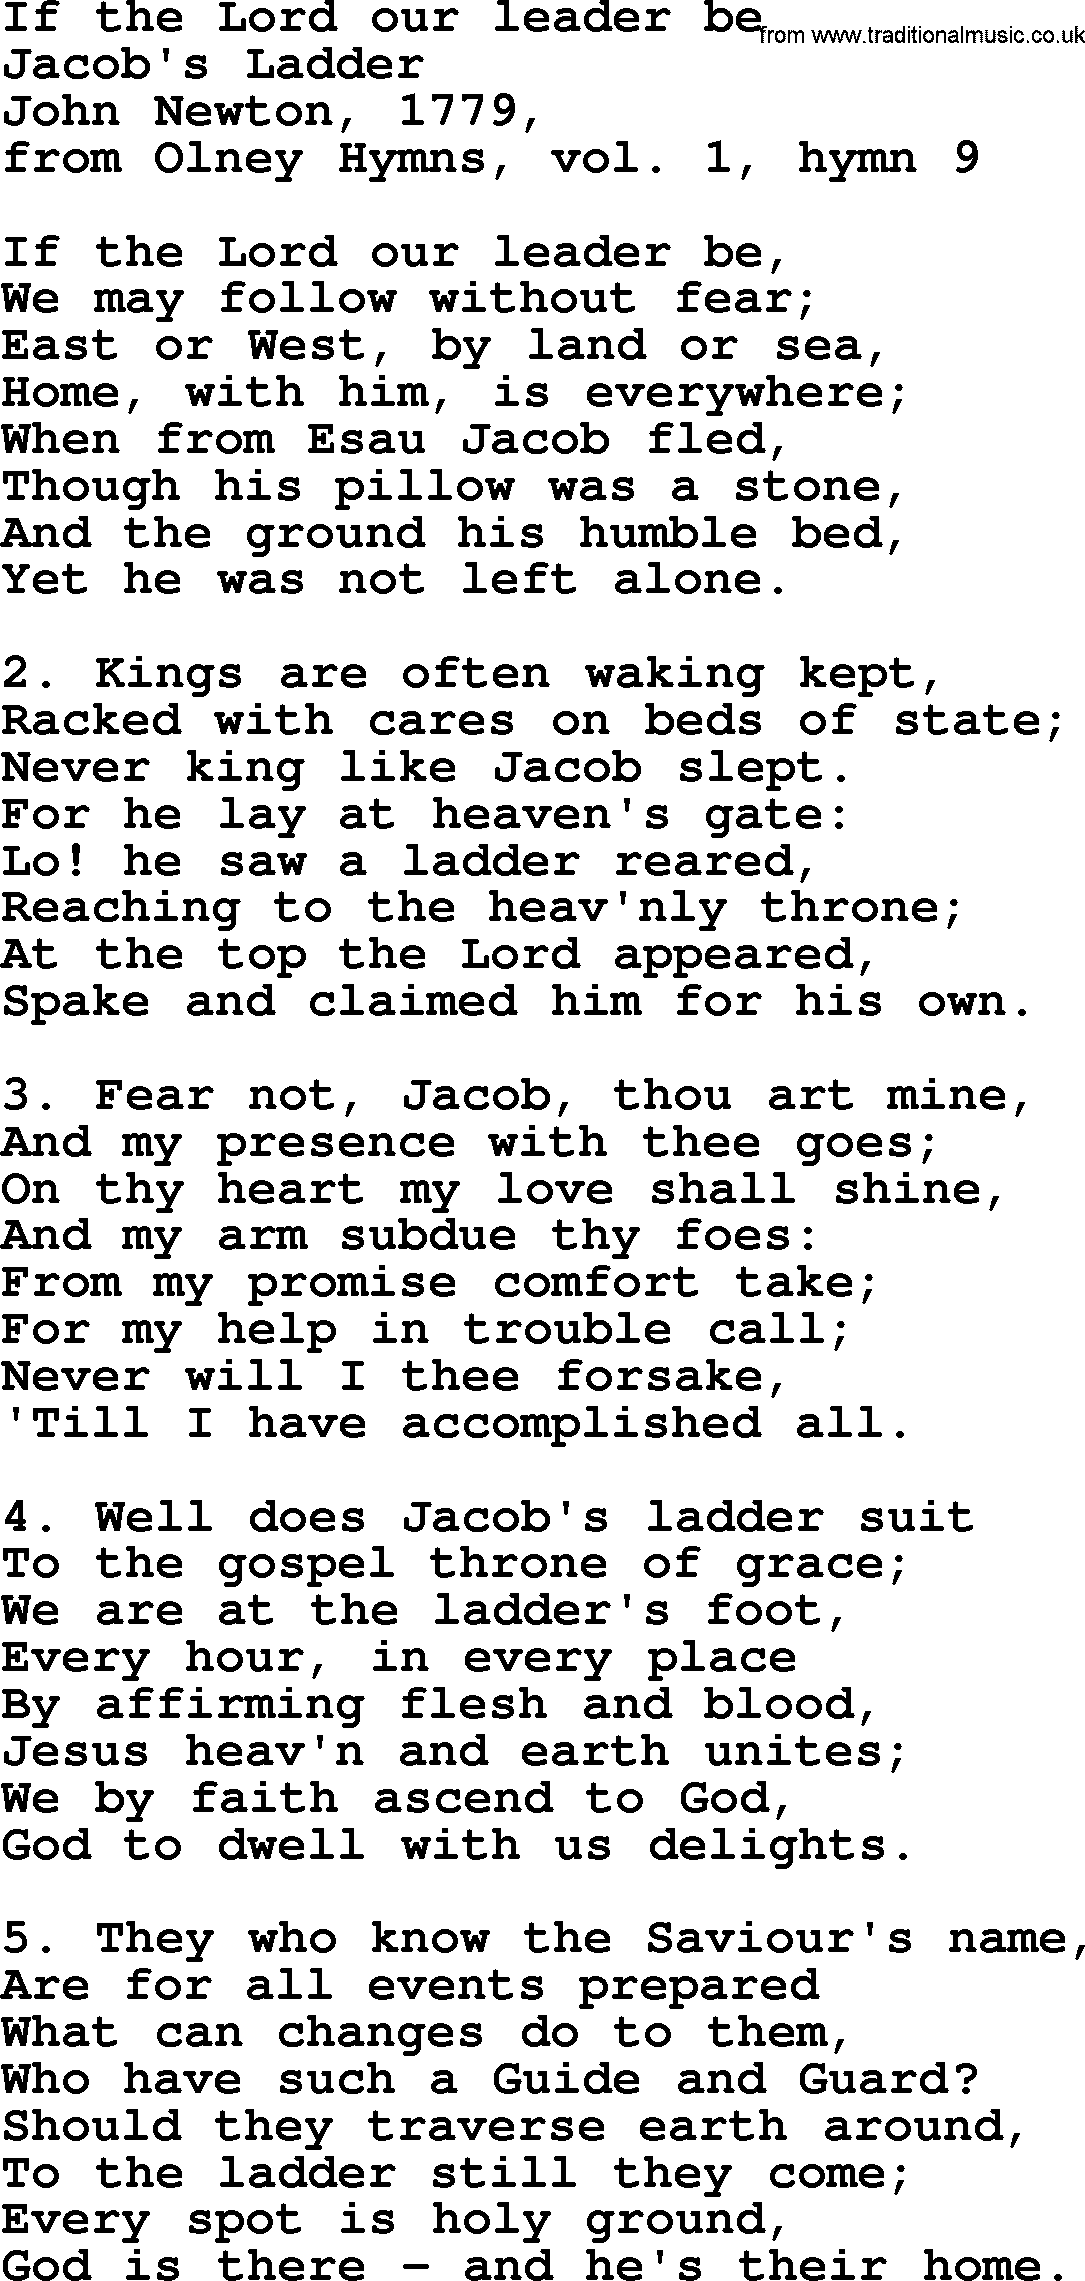 John Newton hymn: If The Lord Our Leader Be, lyrics